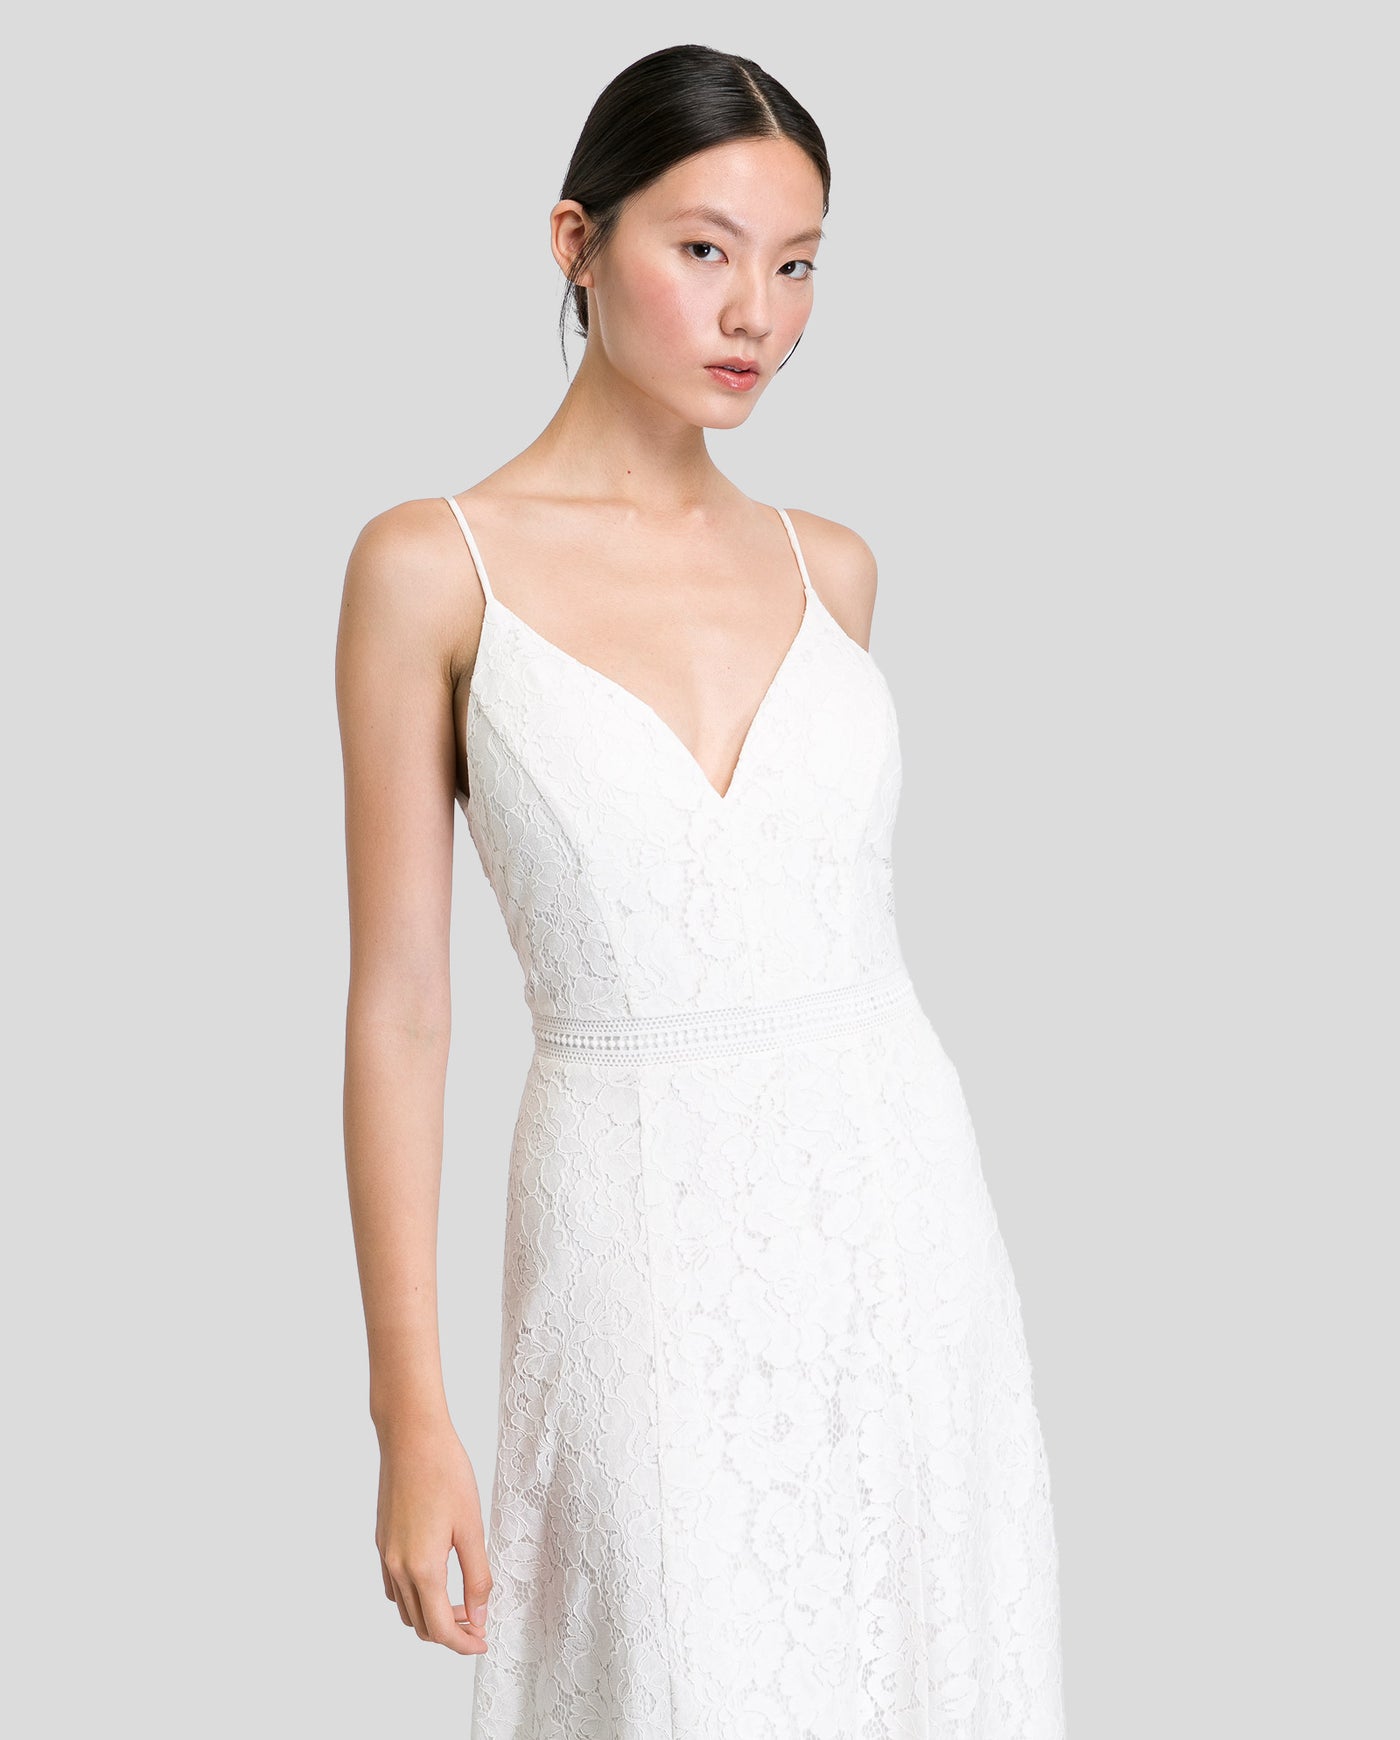 IVY OAK - MARY Bridal Dress - IO1123S7531-WH010 - White